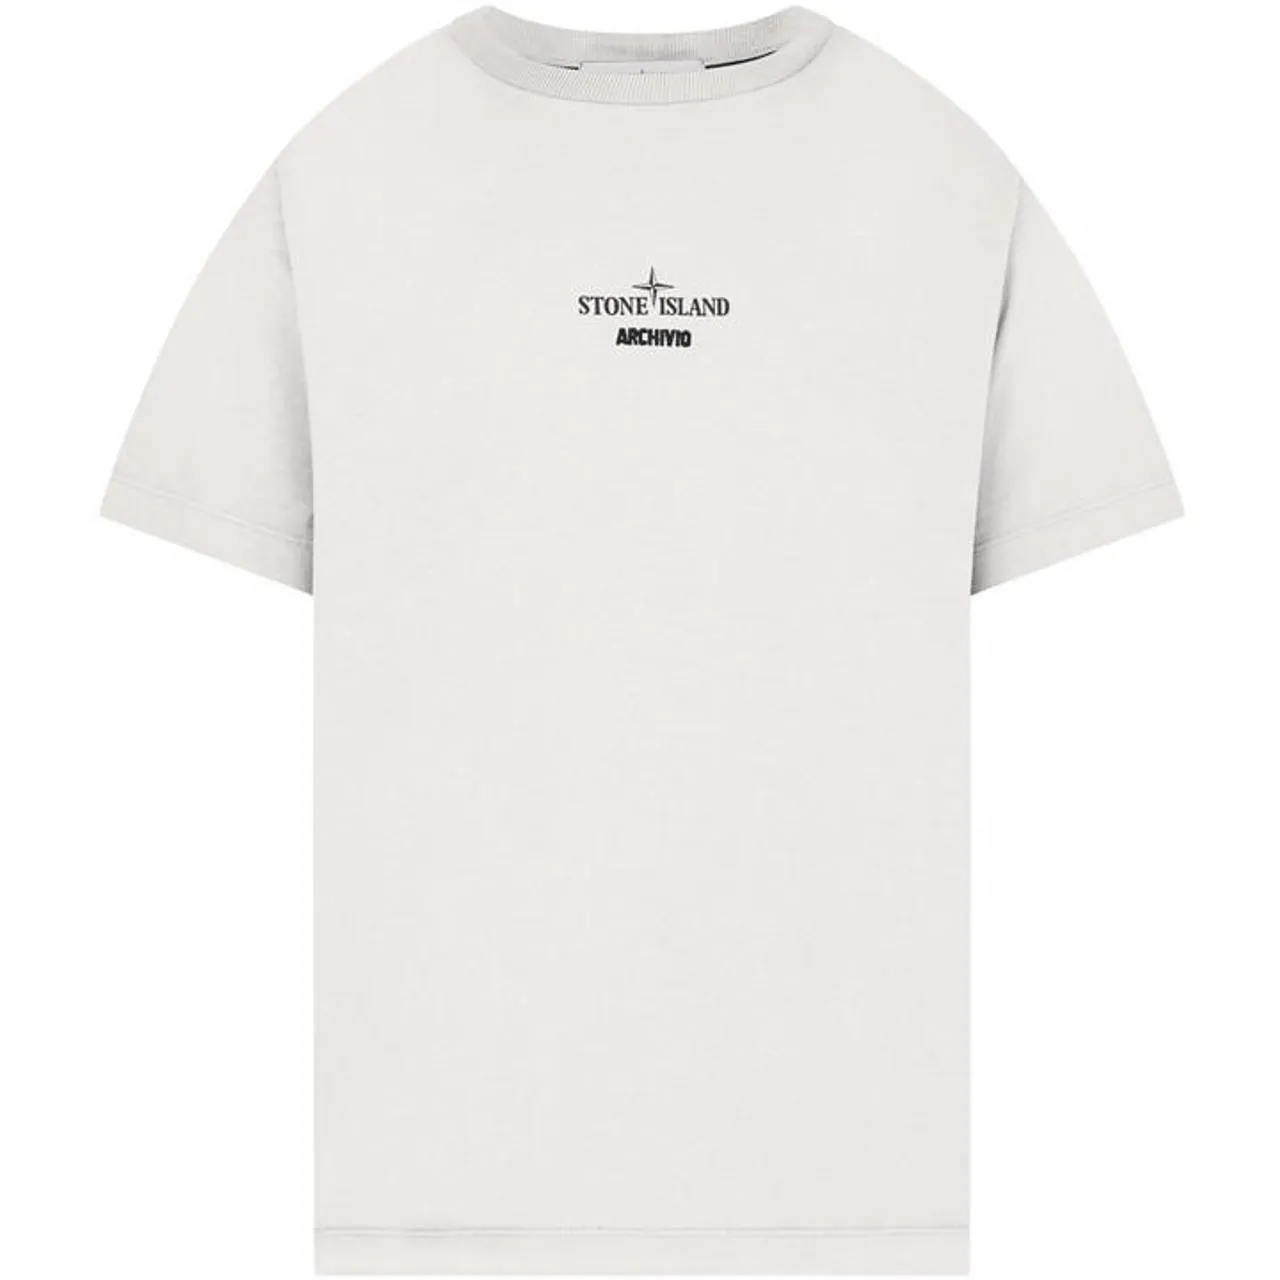 STONE ISLAND Archivio Short Sleeve T-Shirt - White